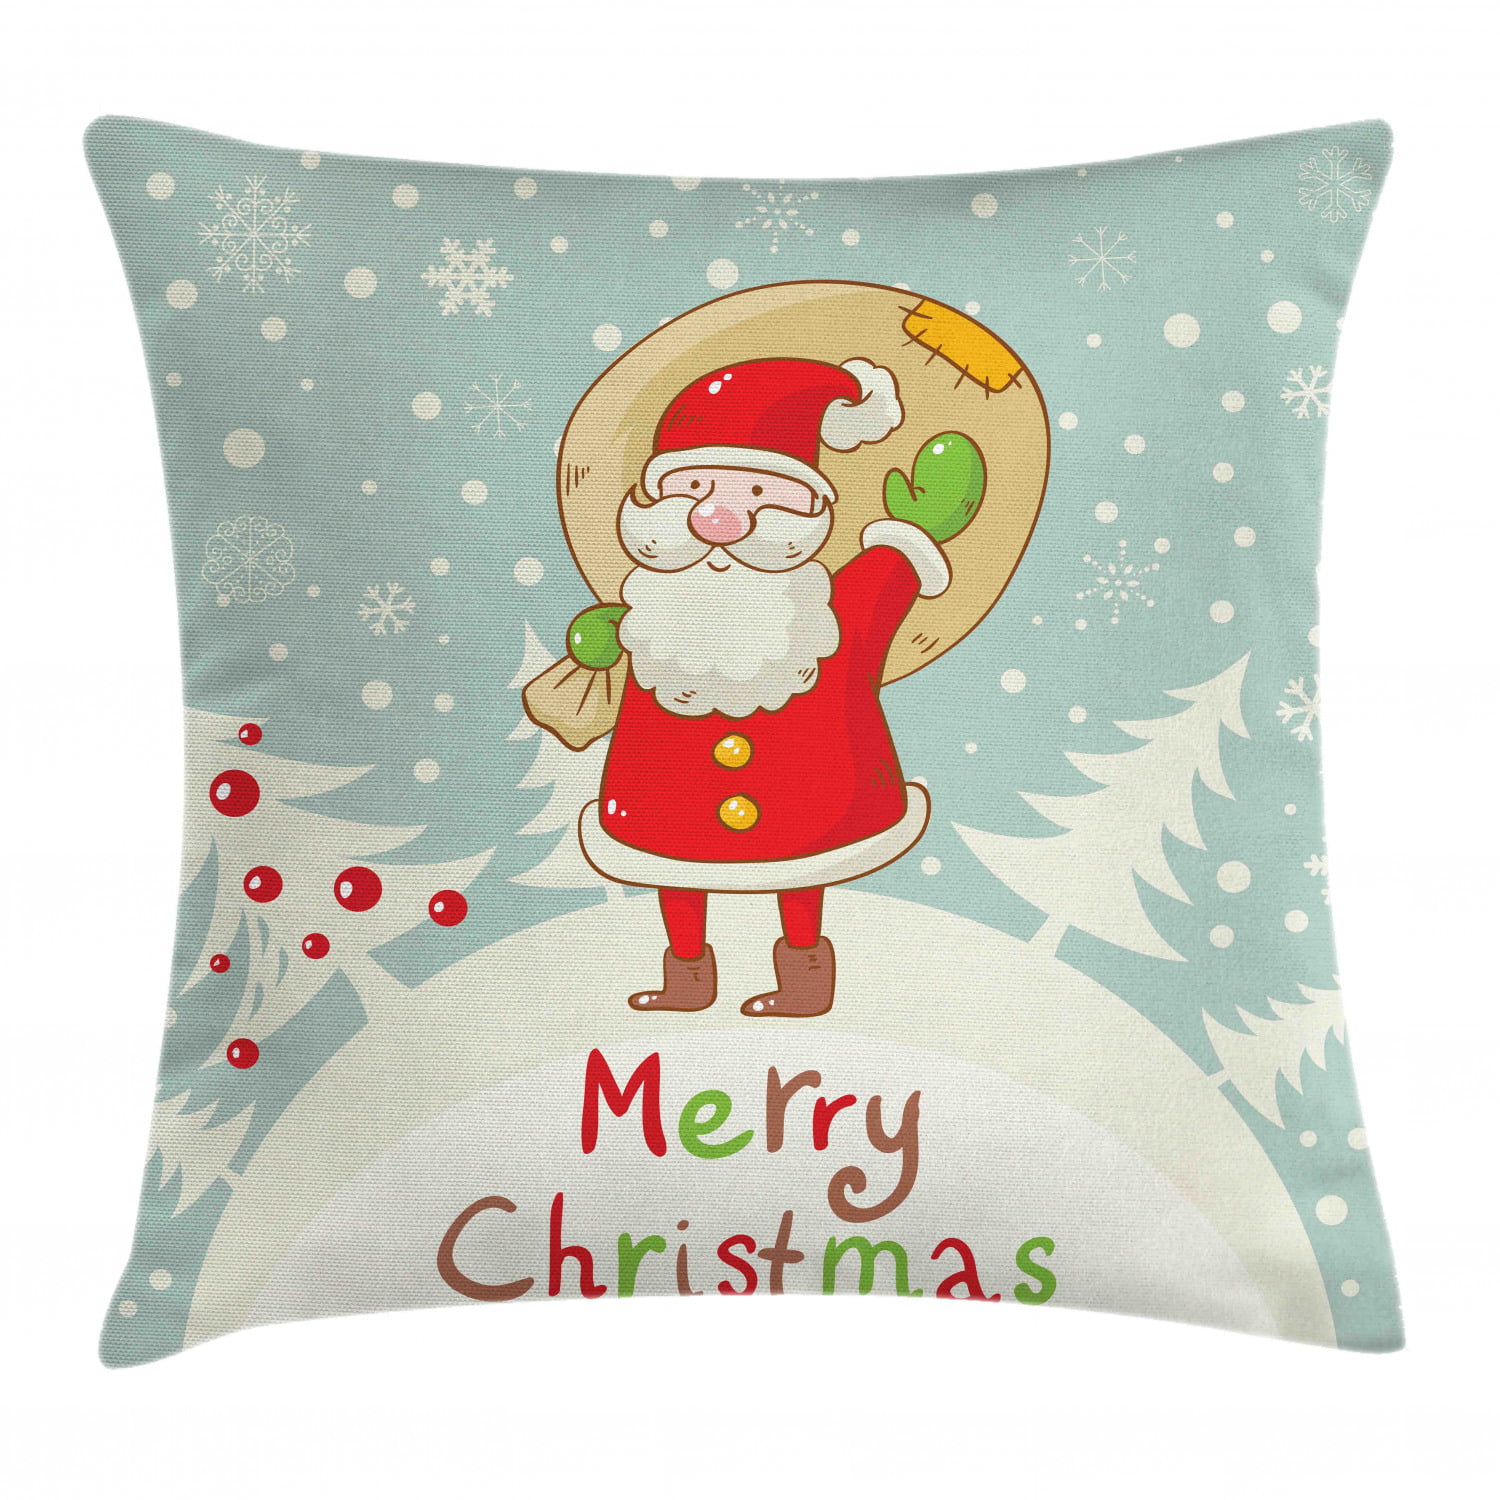 Santa Throw Pillow Cushion Cover, Merry Christmas Theme Cute Santa with a Sack of Presents on